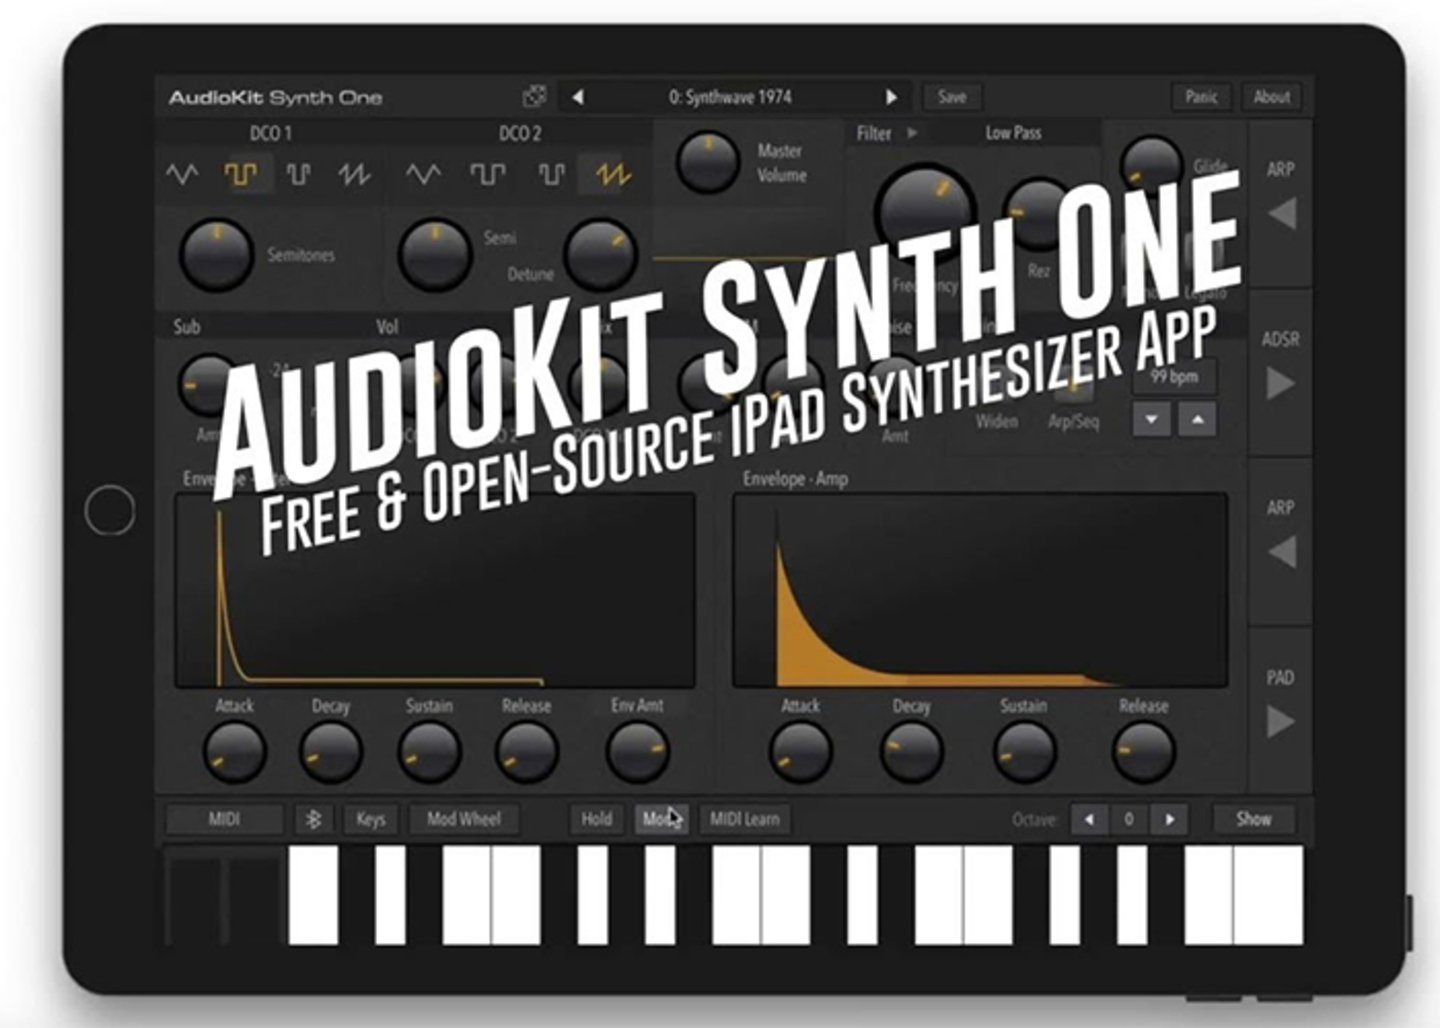 Desata tu creatividad musical con el poderoso AudioKit Synth One